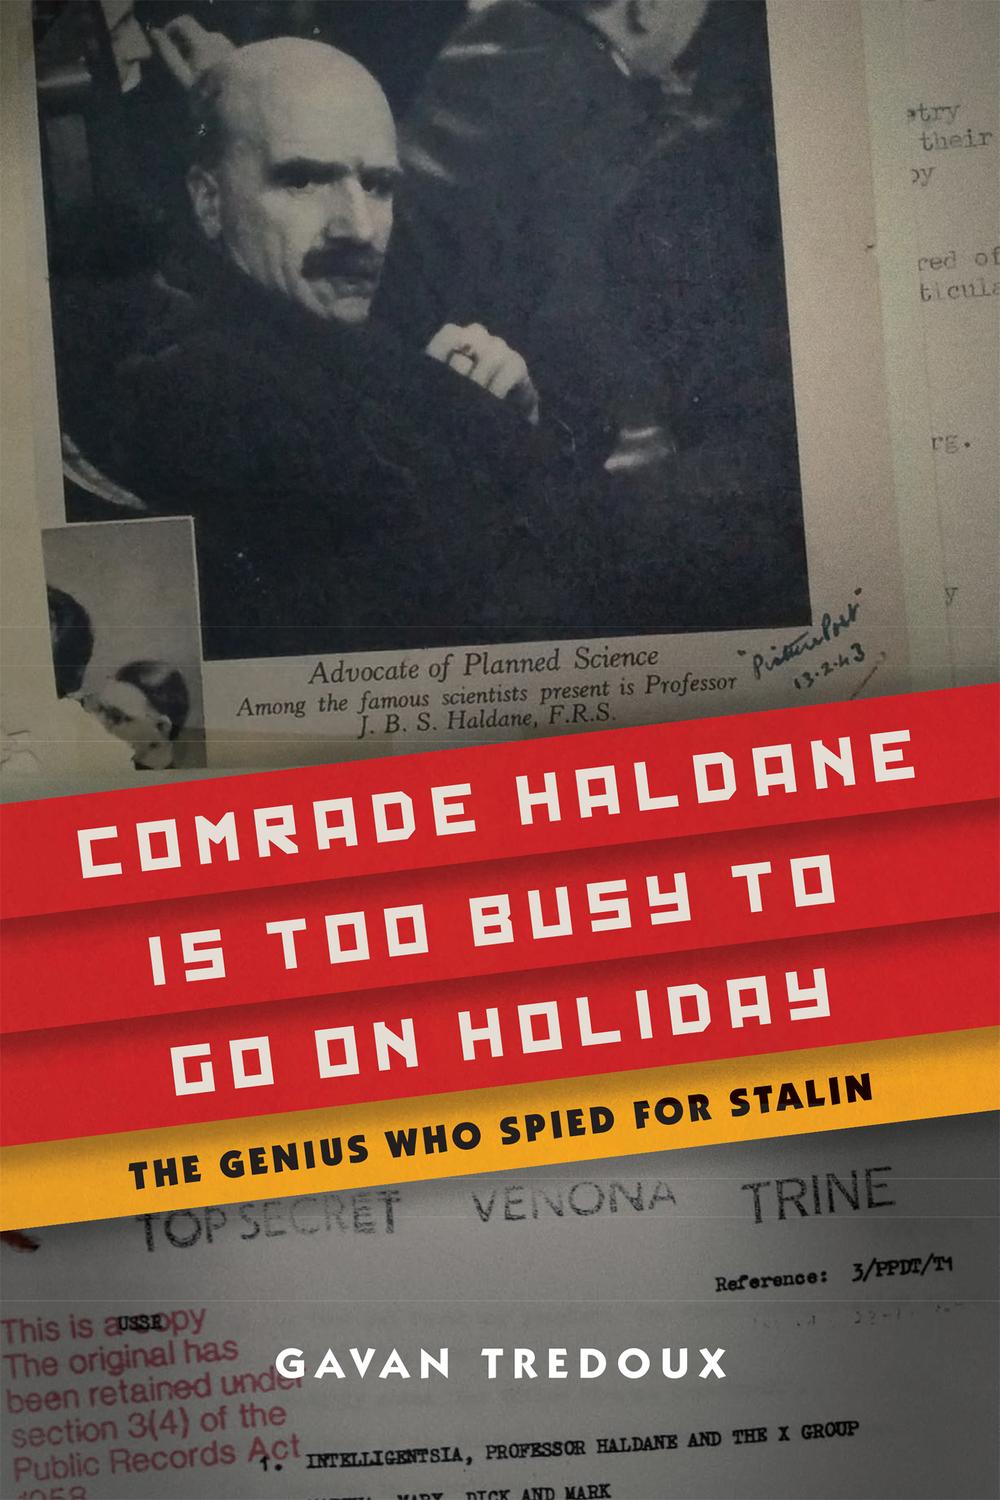 Comrade Haldane Is Too Busy to Go on Holiday - Gavan Tredoux